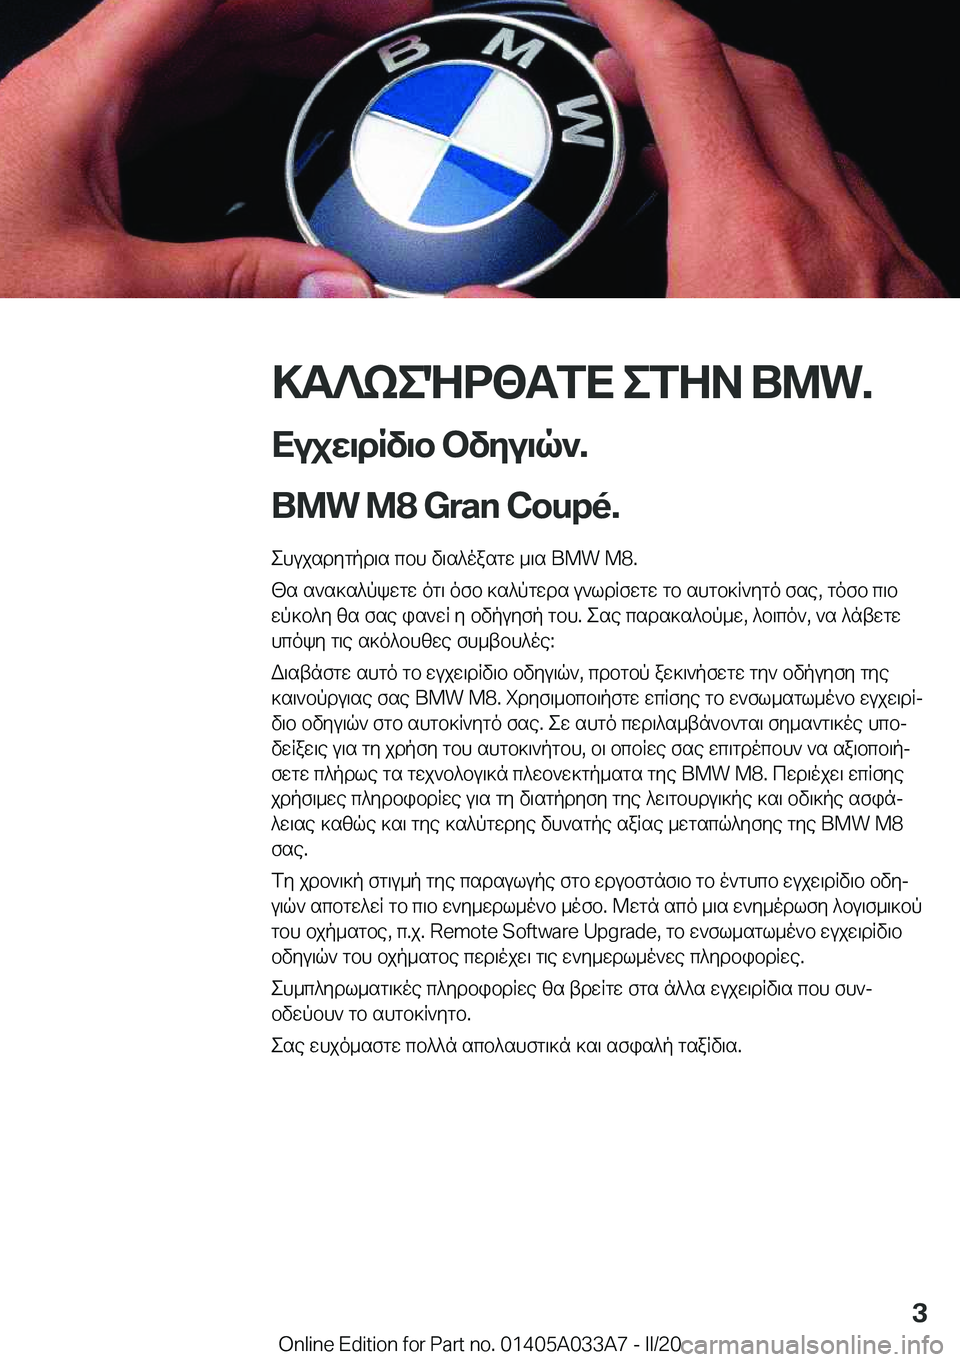 BMW M8 GRAN COUPE 2020  ΟΔΗΓΌΣ ΧΡΉΣΗΣ (in Greek) >T?keNd<TfX�efZA��B�M�W�.
Xujw\dRv\b�bvyu\q`�.
�B�M�W��M�8��G�r�a�n��C�o�u�p�